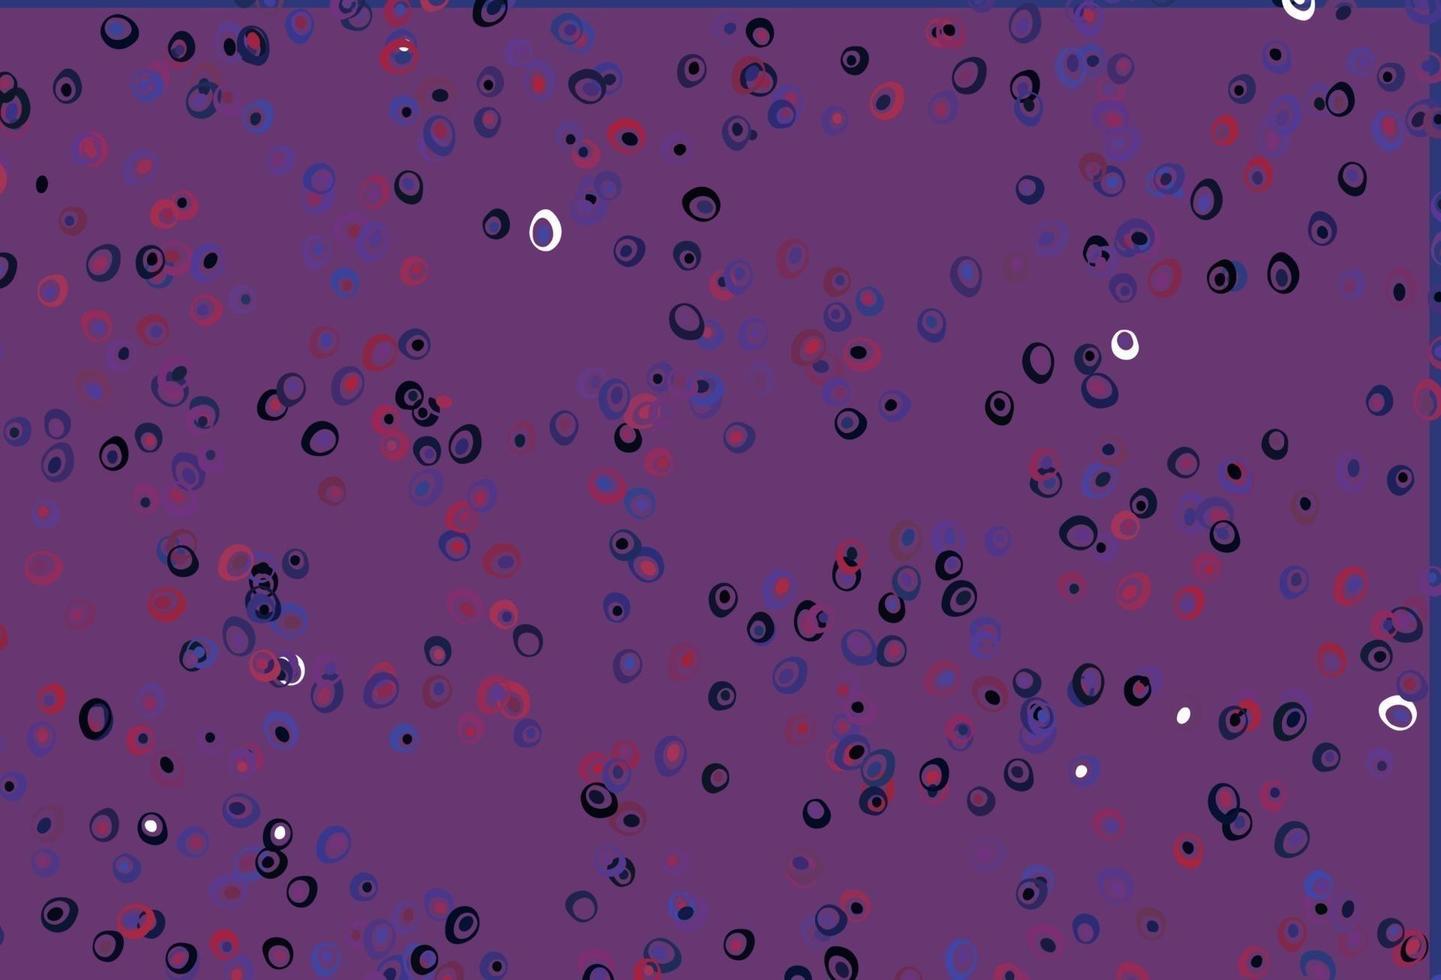 lichtblauwe, rode vectorlay-out met cirkelvormen. vector